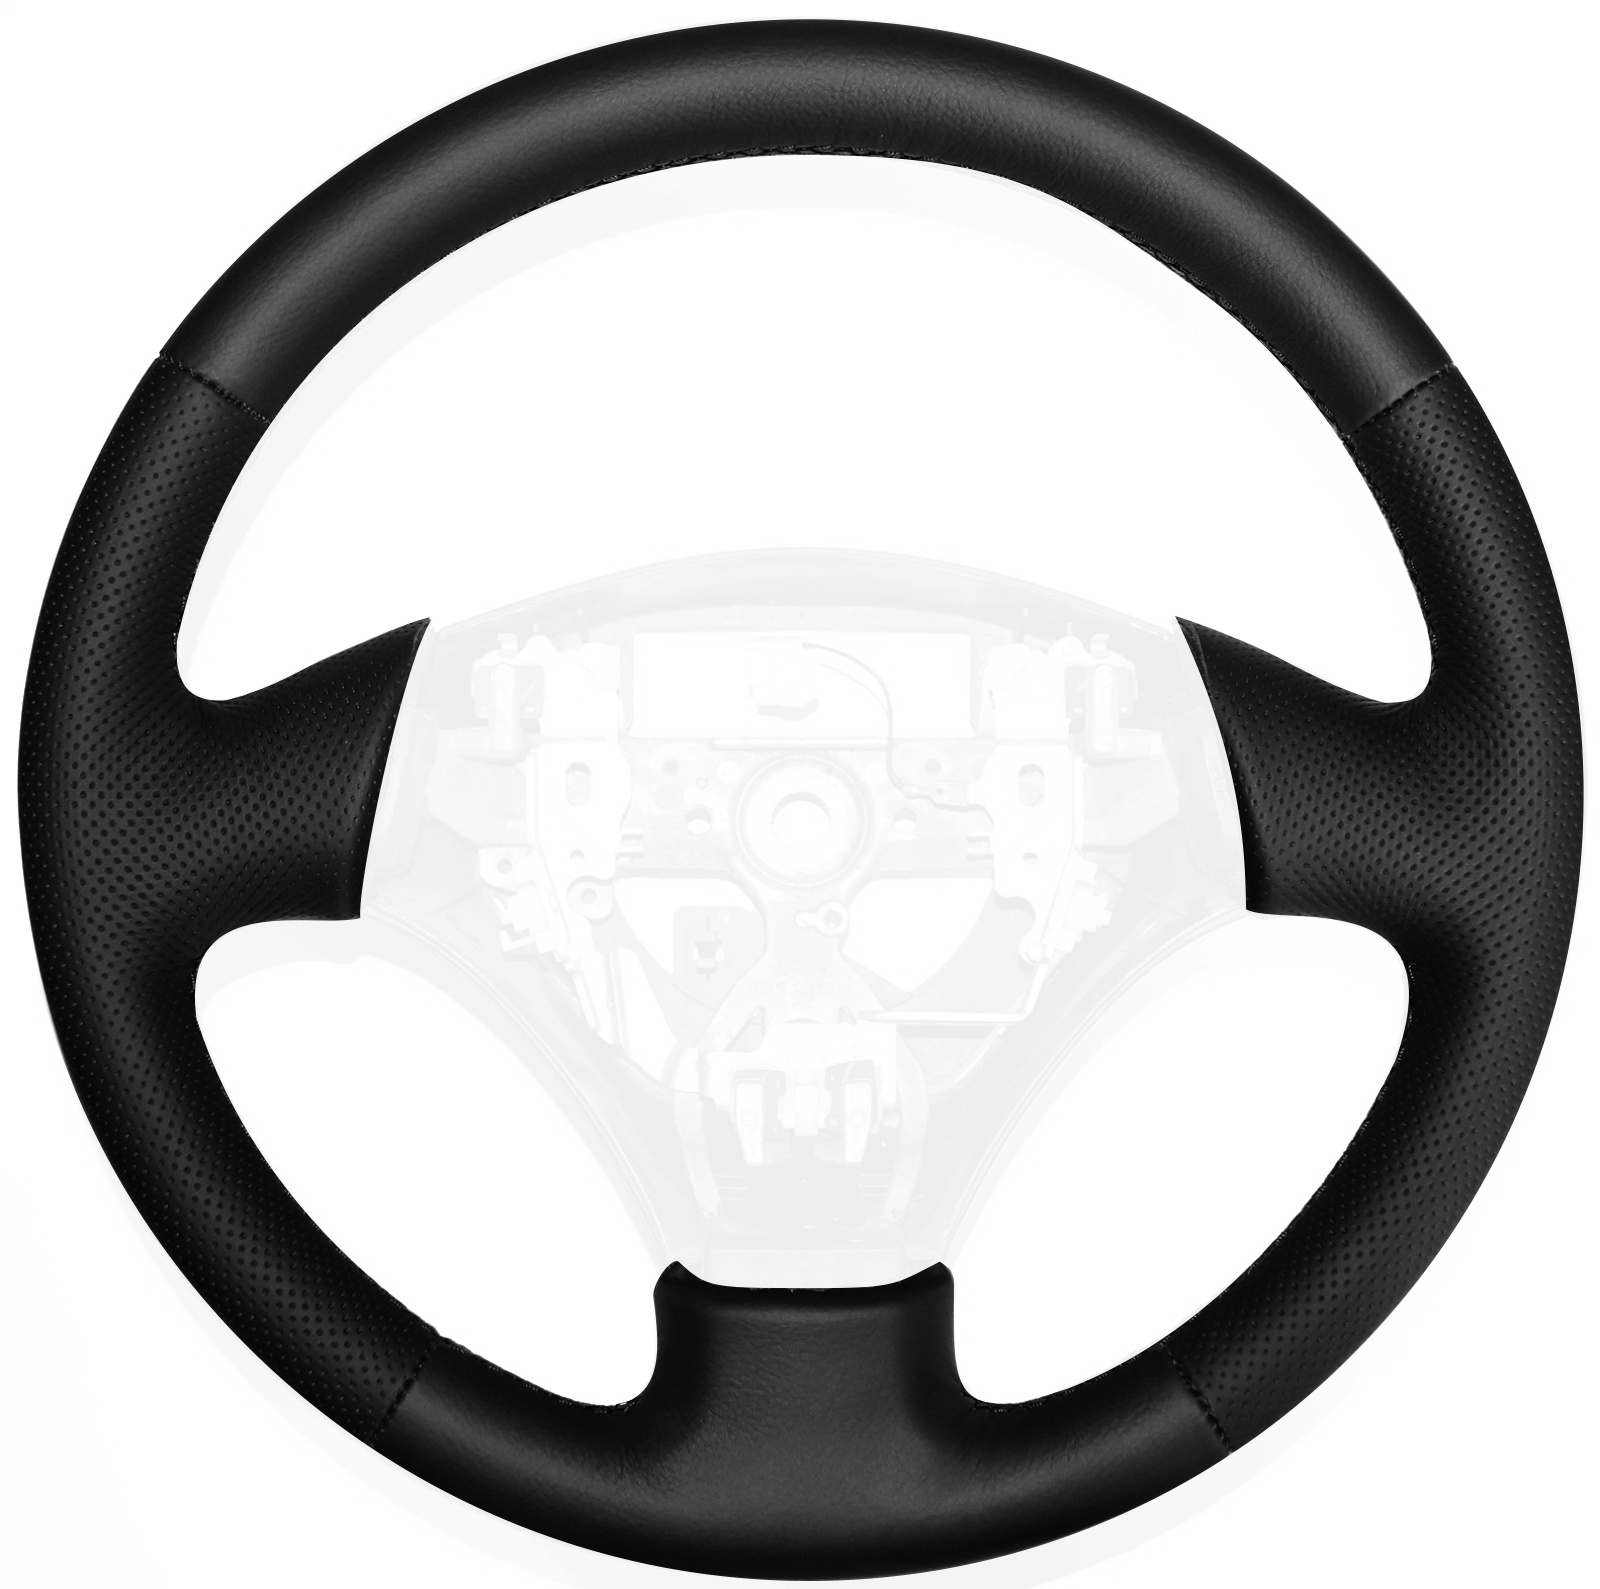 2001-06 Toyota Camry steering wheel cover - 3-spoke 2001-04